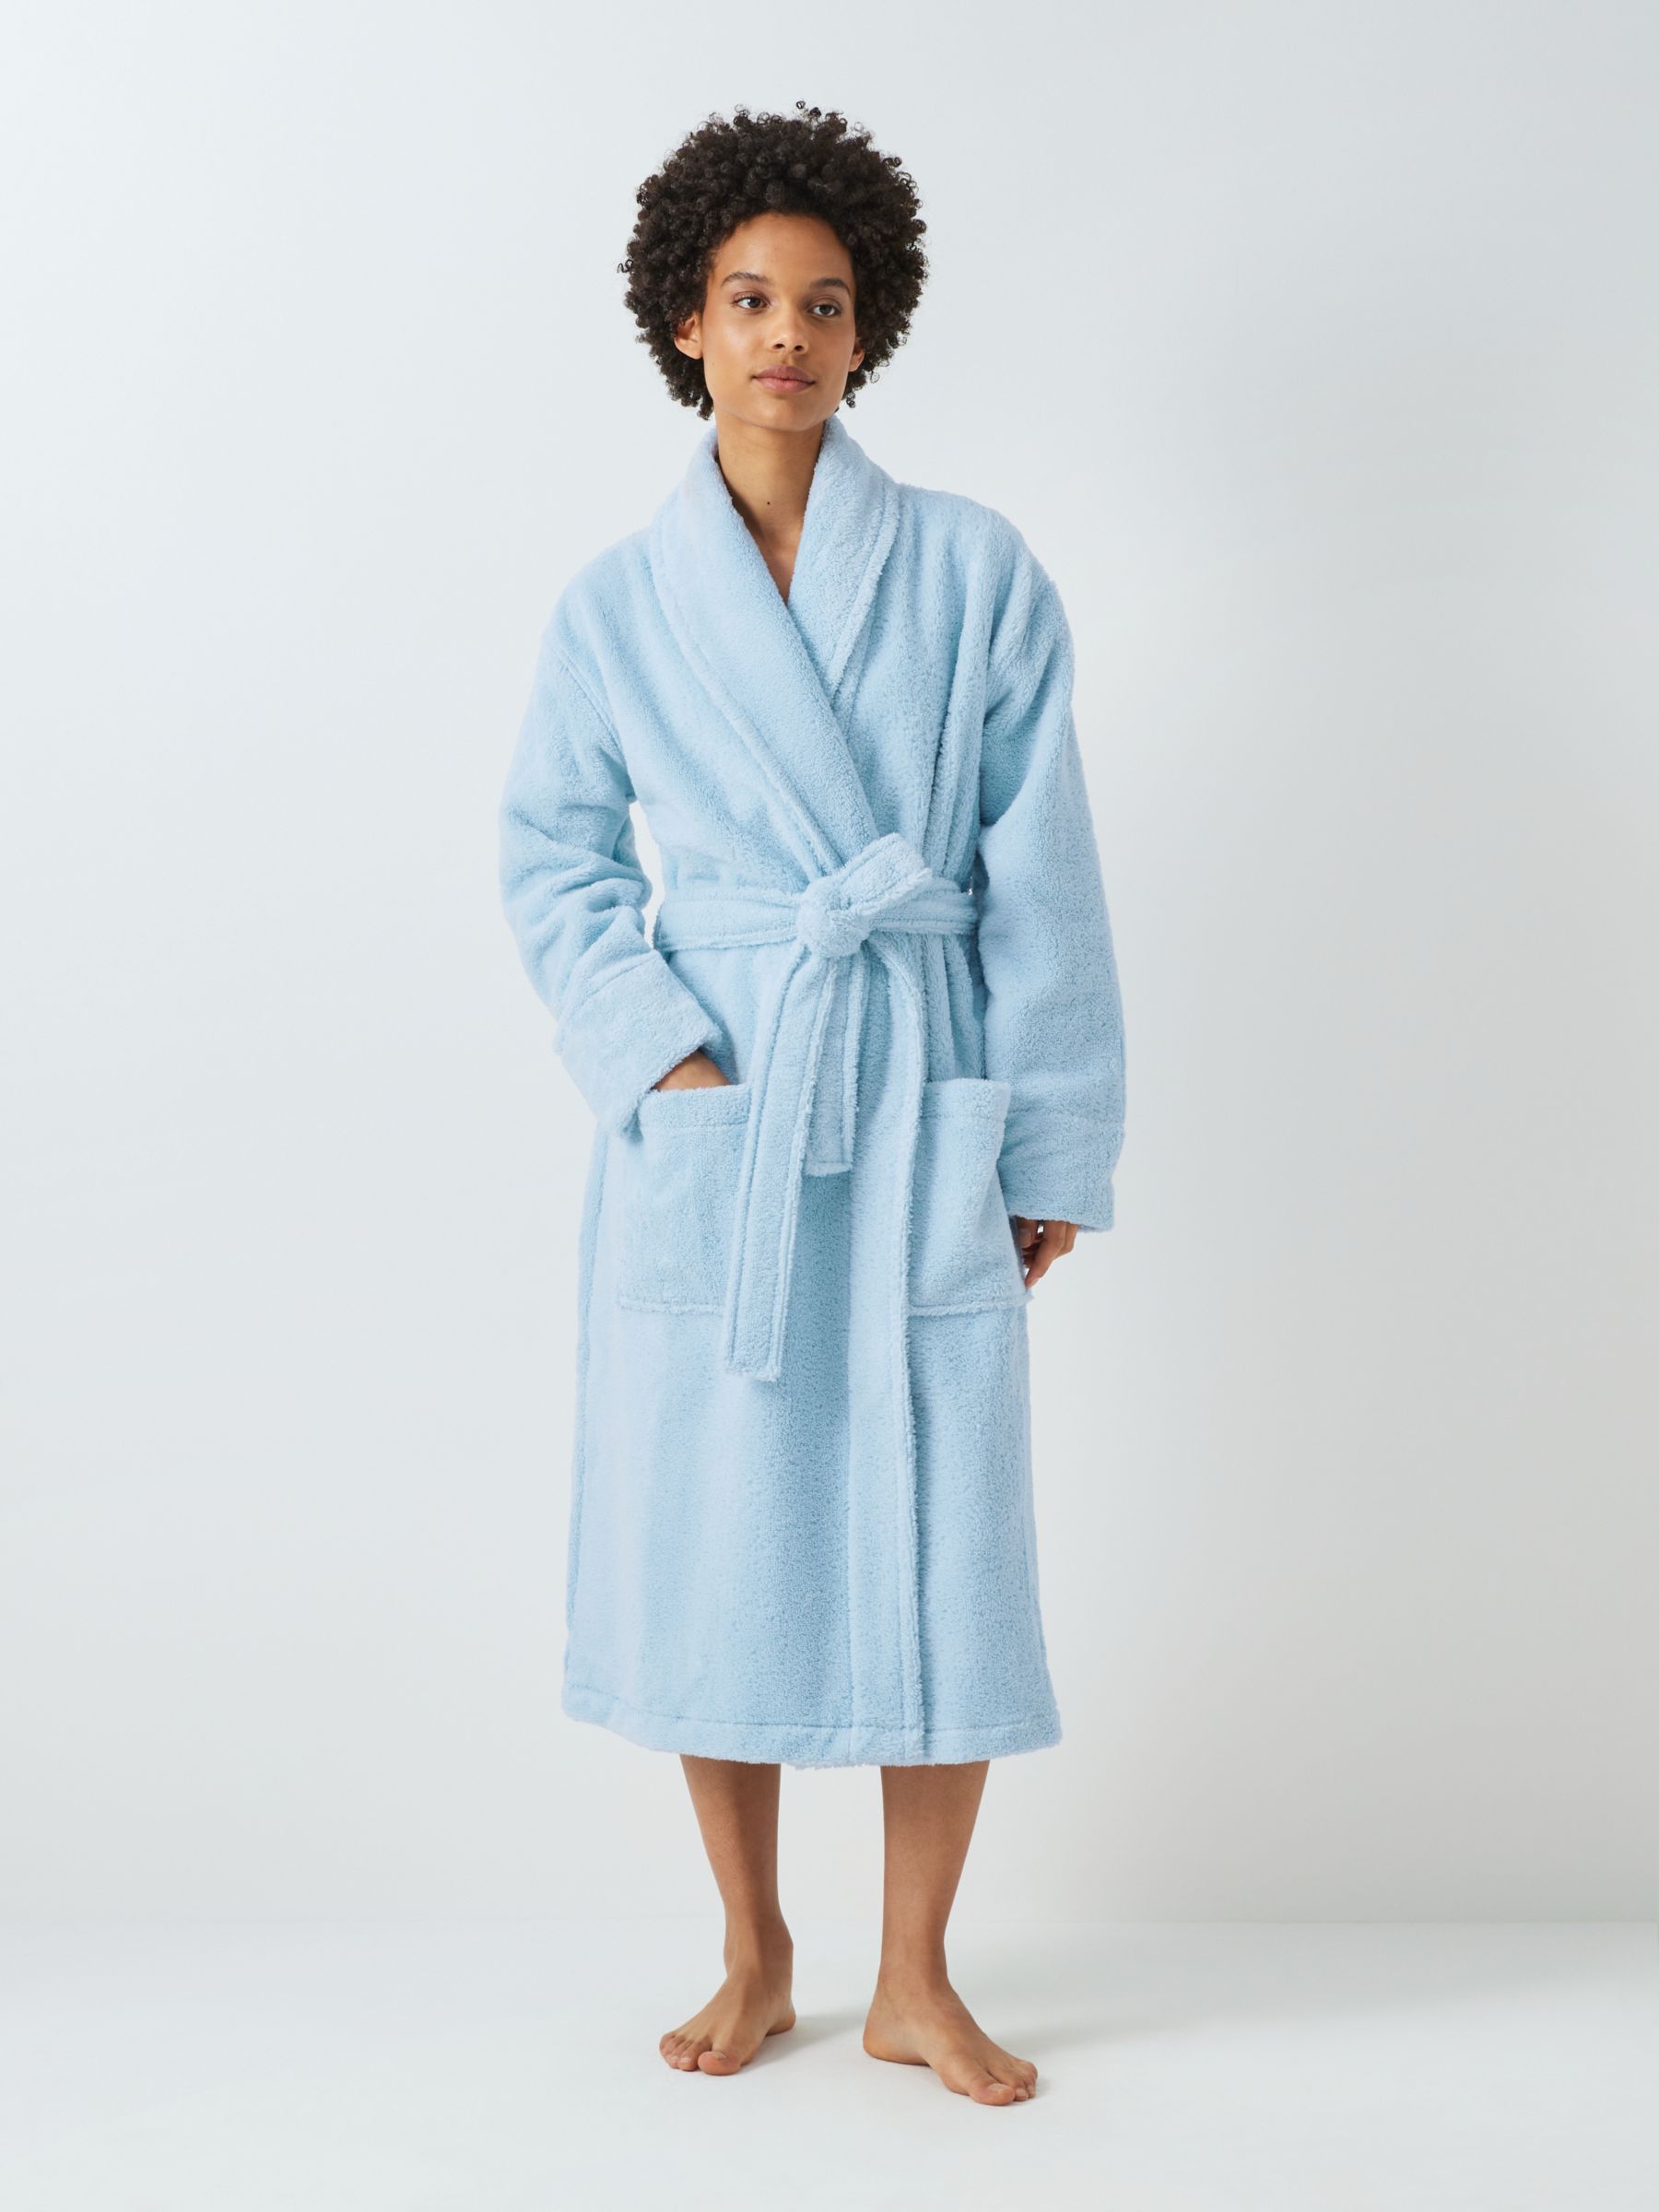 robe age 5 John Lewis john lewis girls hooded fleecy dressing gown 